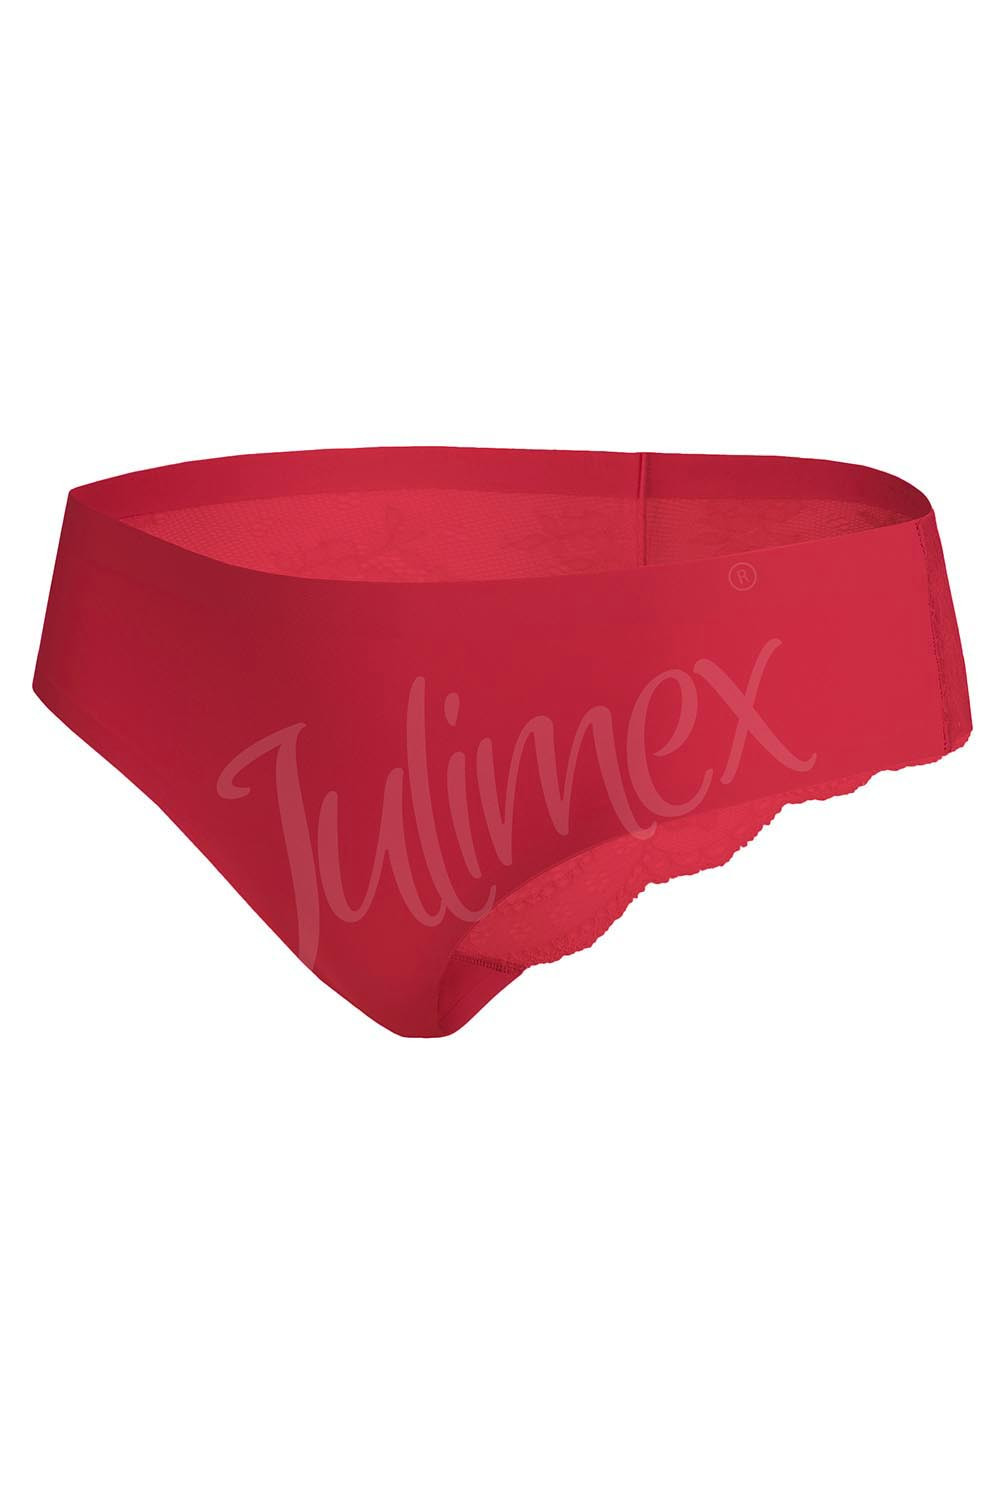 Julimex Tanga panty kolor:czerwony M